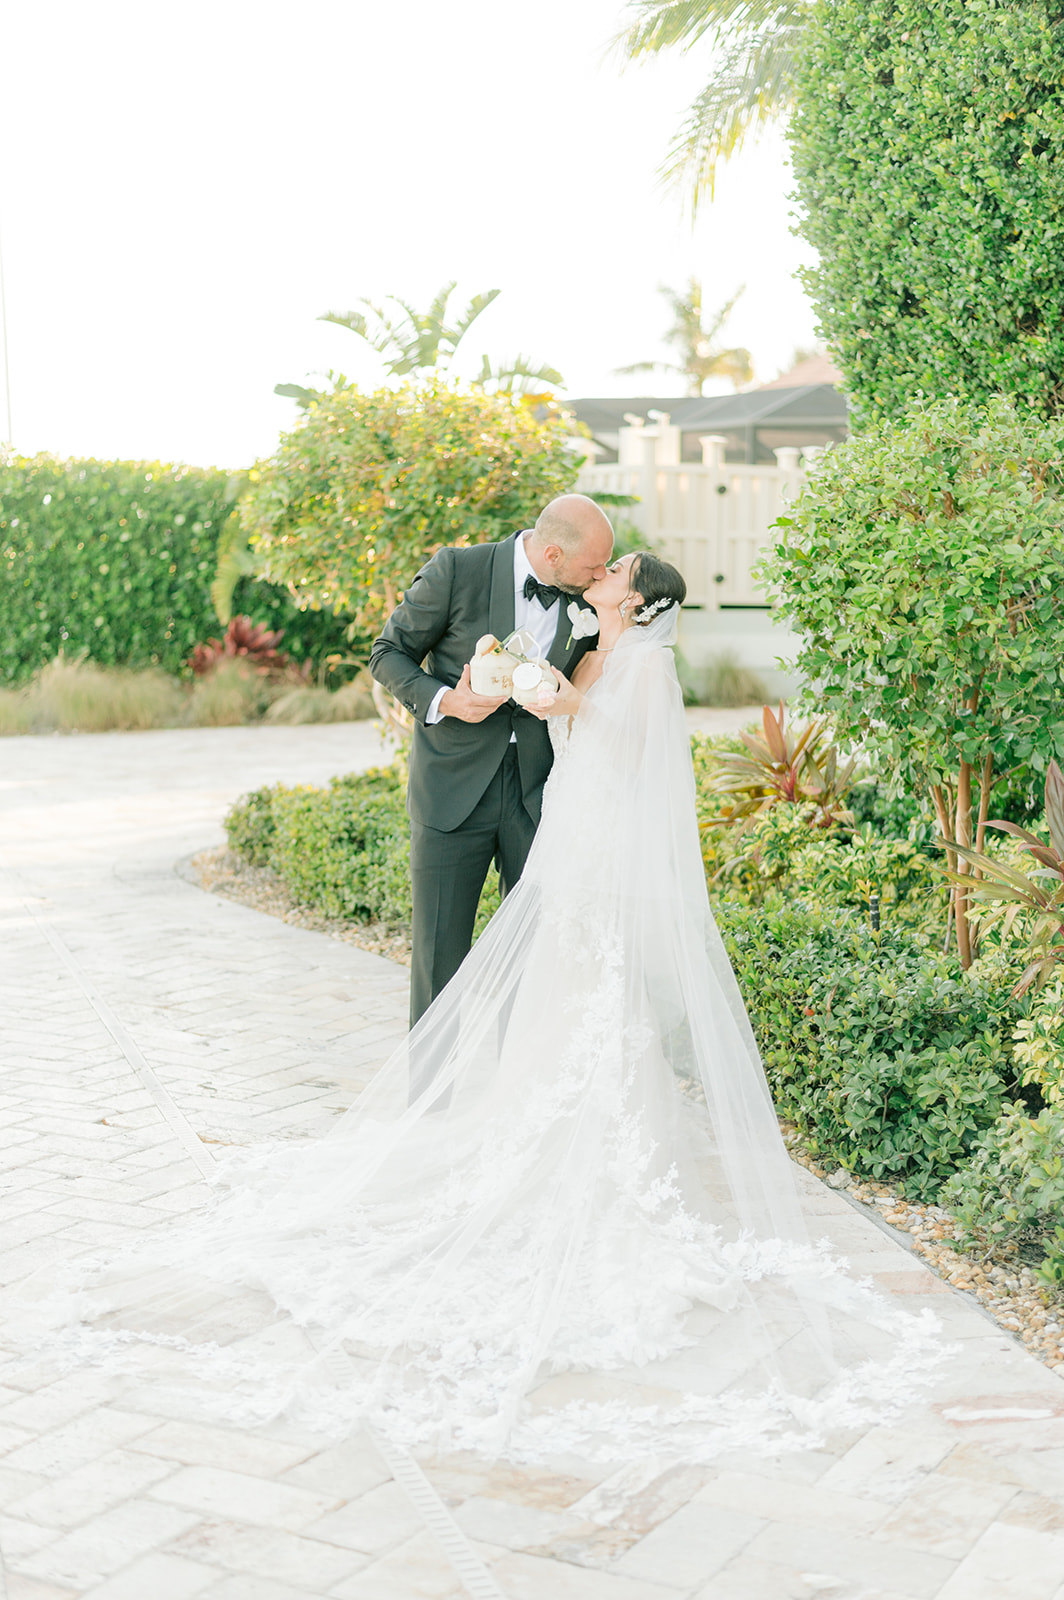 Marco Island Wedding Photographer - Capturing the Magic of Your Wedding Day
